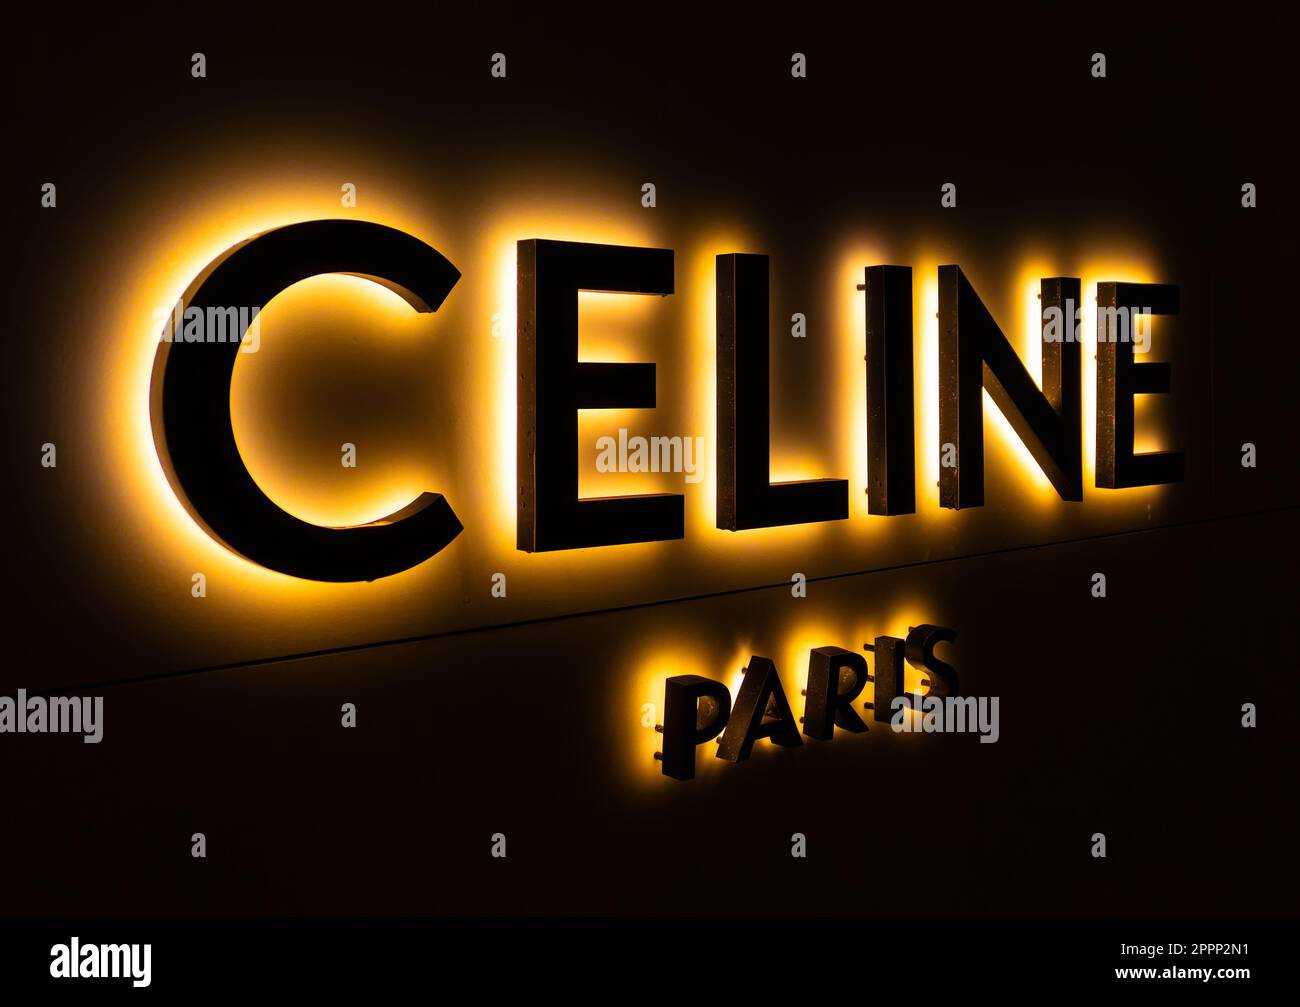 Browse thousands of Celine (Brand) images for design inspiration